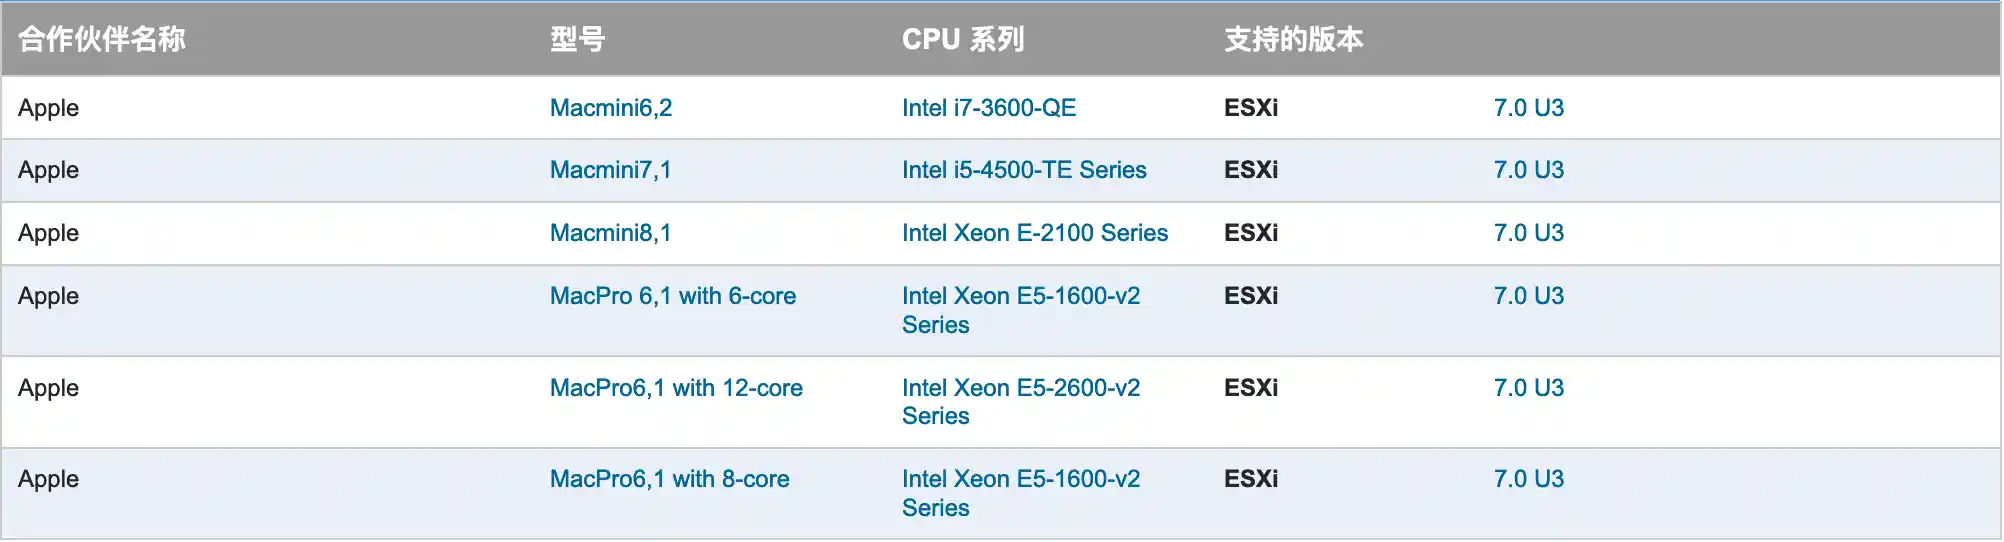 VMware ESXi 8.0b Unlocker  OEM BIOS 集成 REALTEK 网卡驱动和 NVMe 驱动 (集成驱动版)